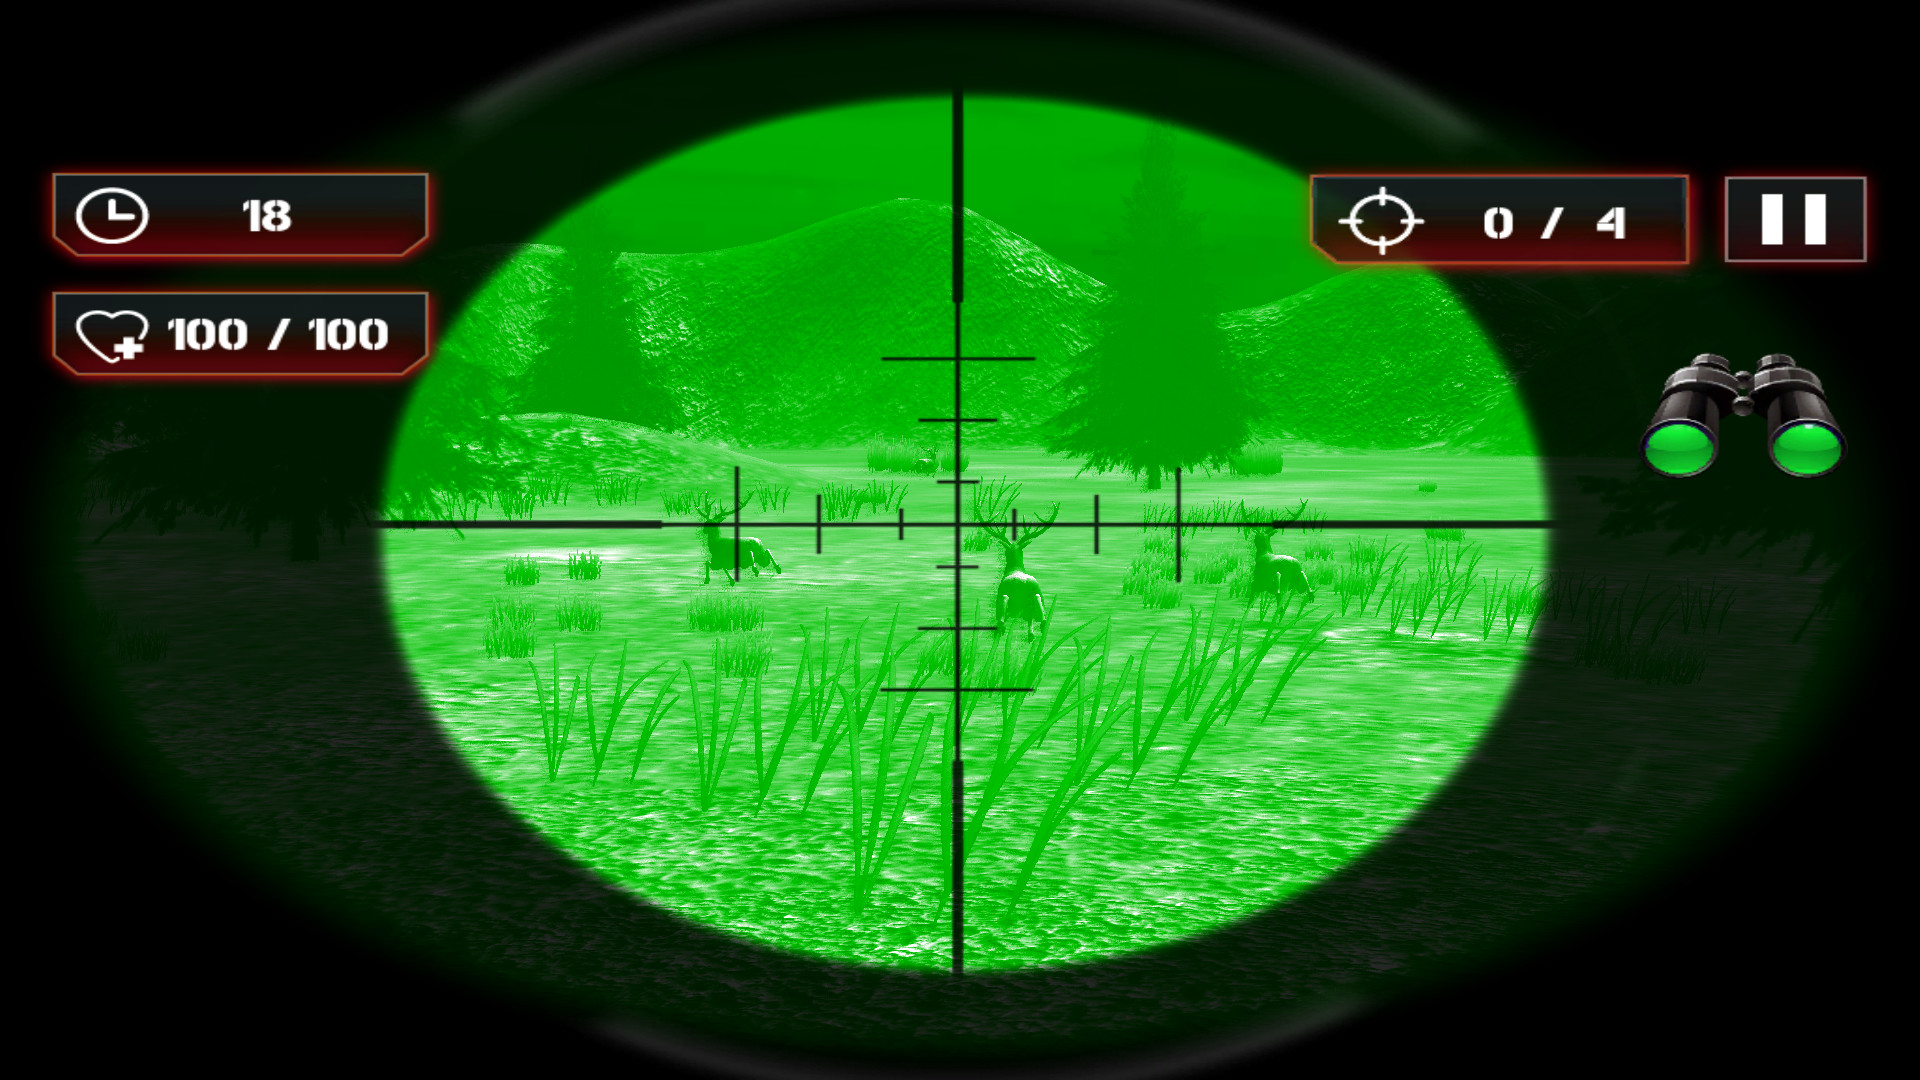 Sniper Hunter Adventure 3D screenshot